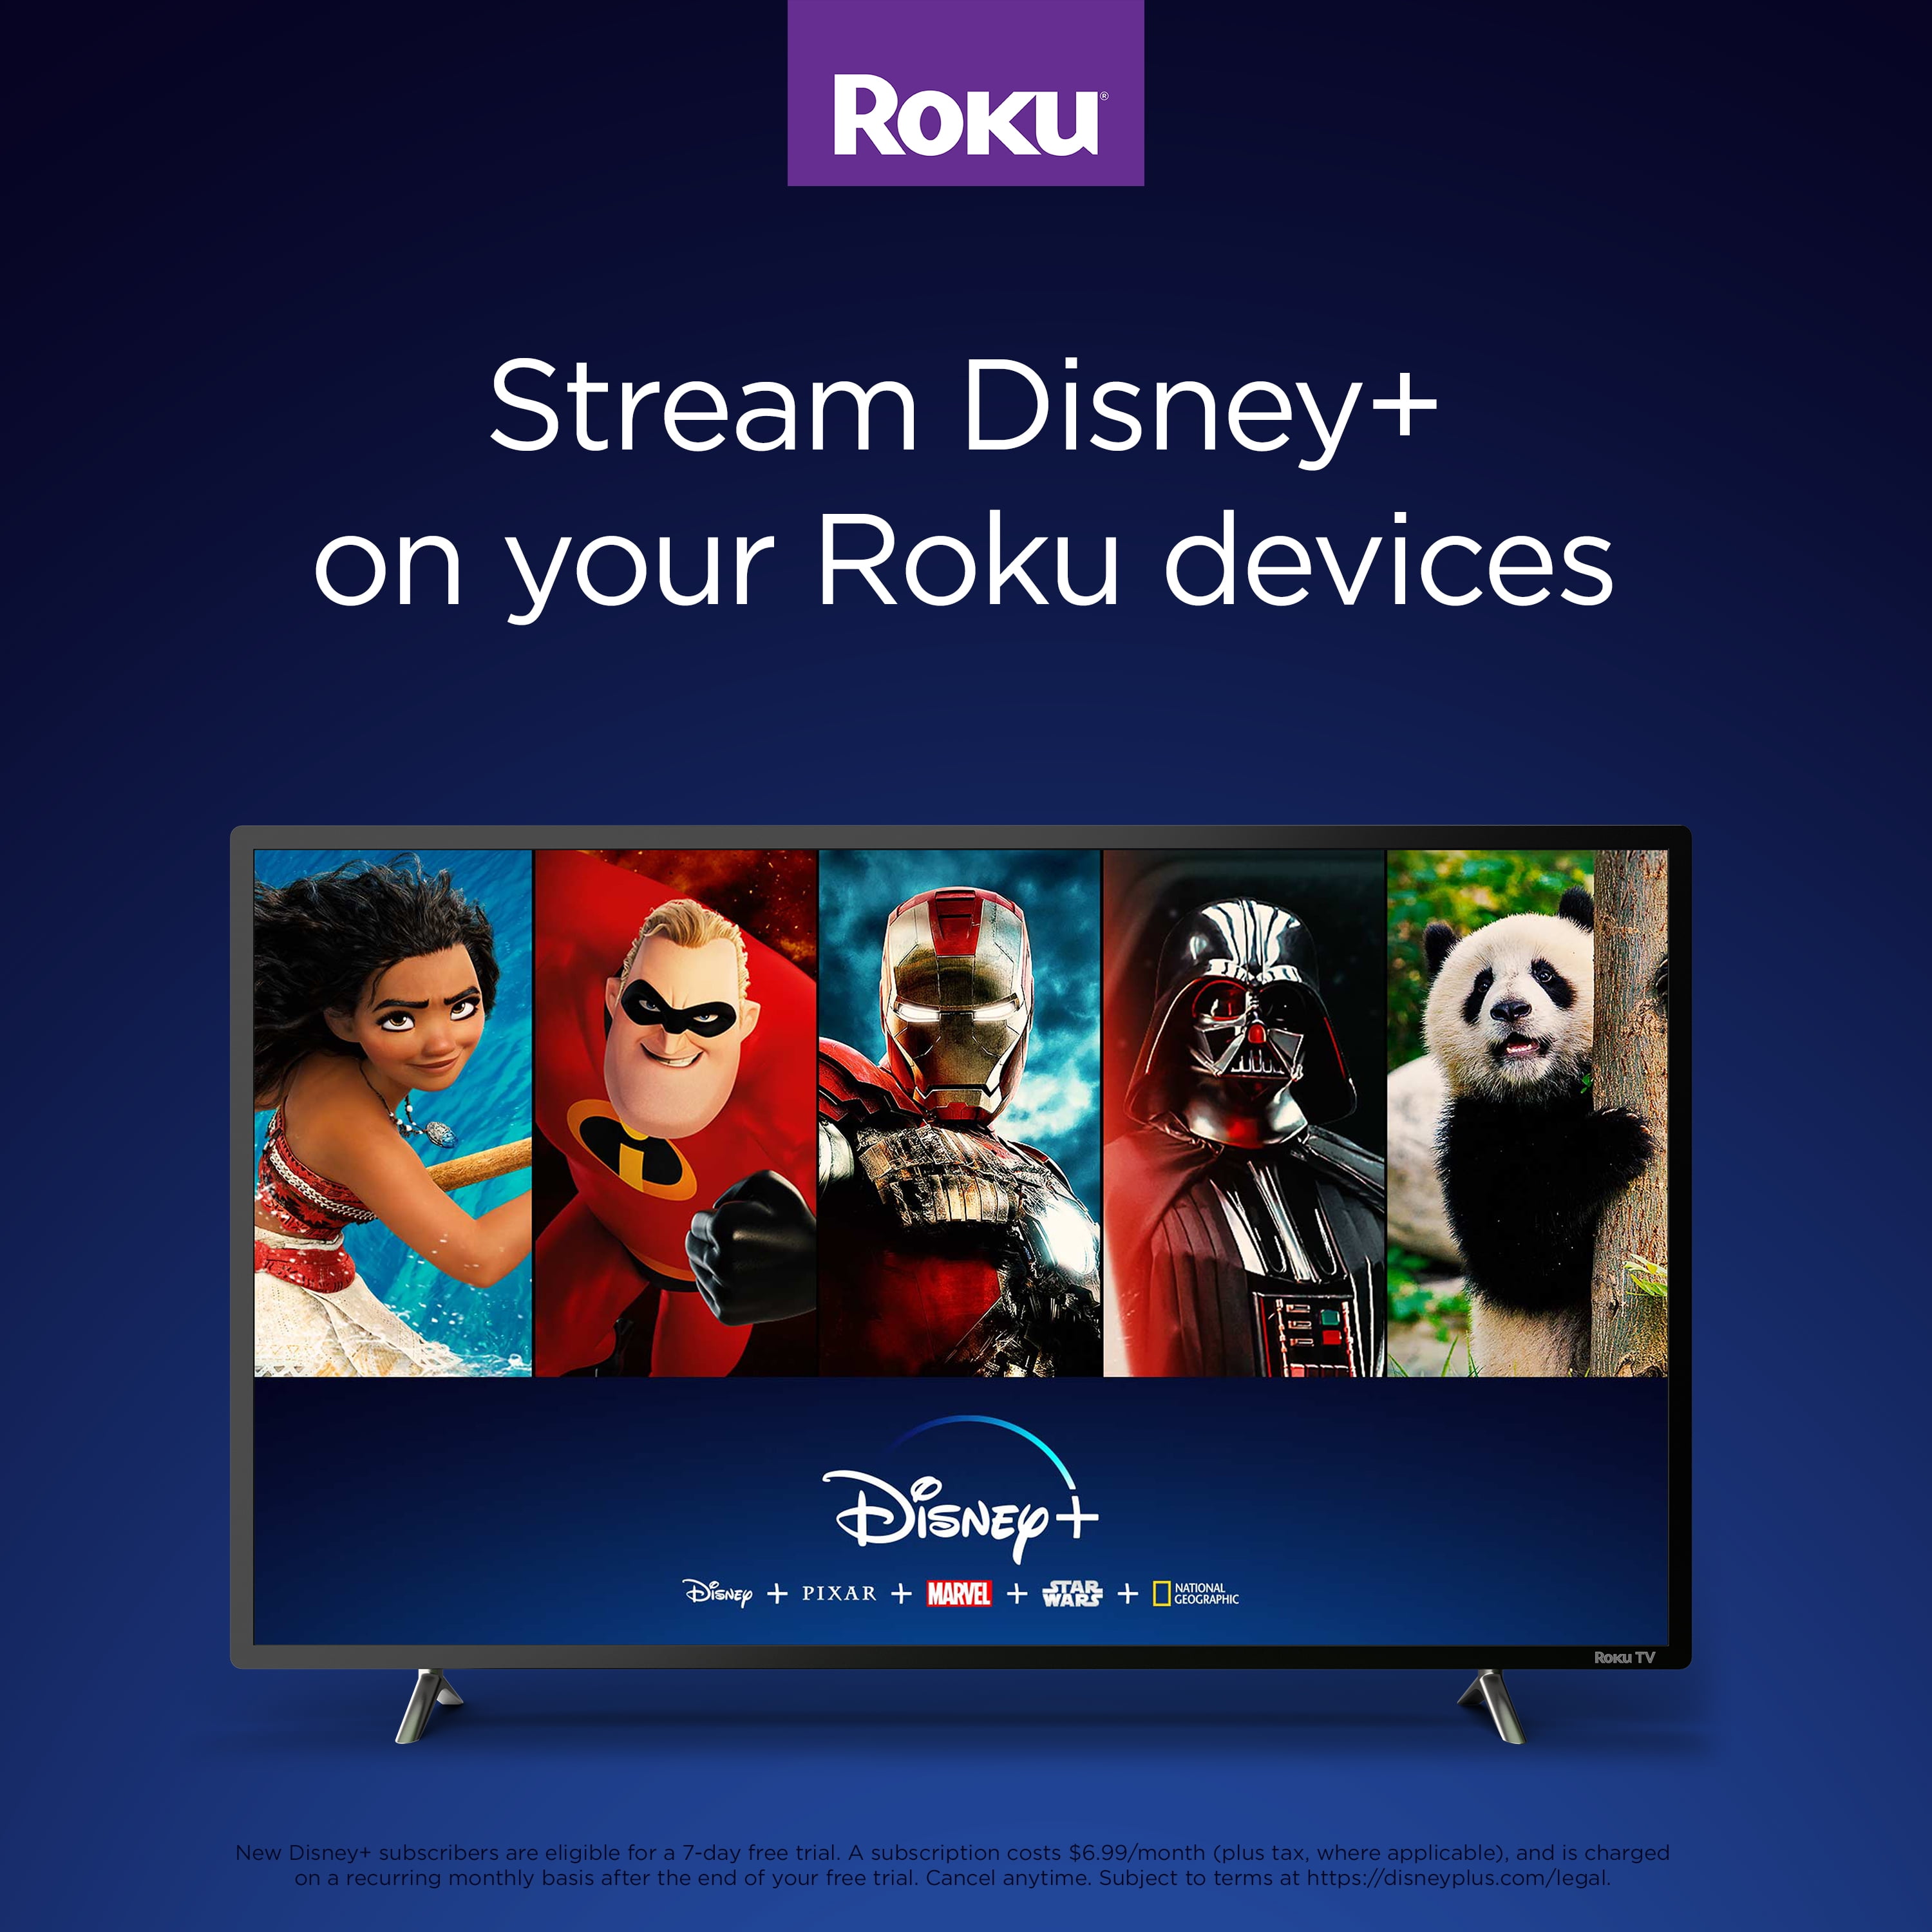 Roku 3800RW Streaming Stick GEN6 with Voice Remote - Black